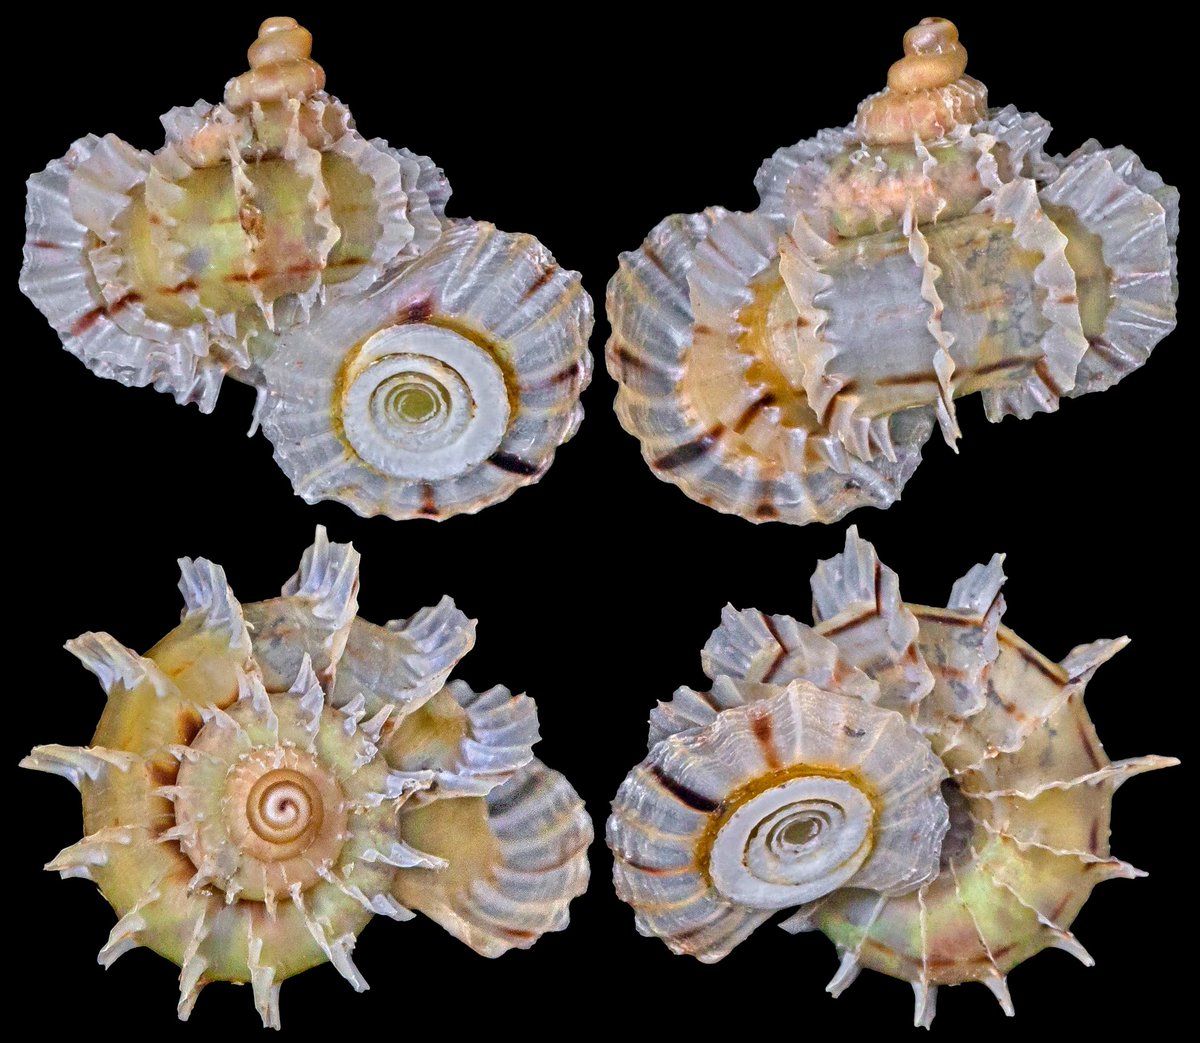 Land snail Meganipha rhecta Thompson, 1978
10.4mm, Loma del Puerto, Puerto Plata Province, Dominican Republic, image:squamiferum.net #landsnail #gastropod #DomincanRepublic #mollusc #biodiversity